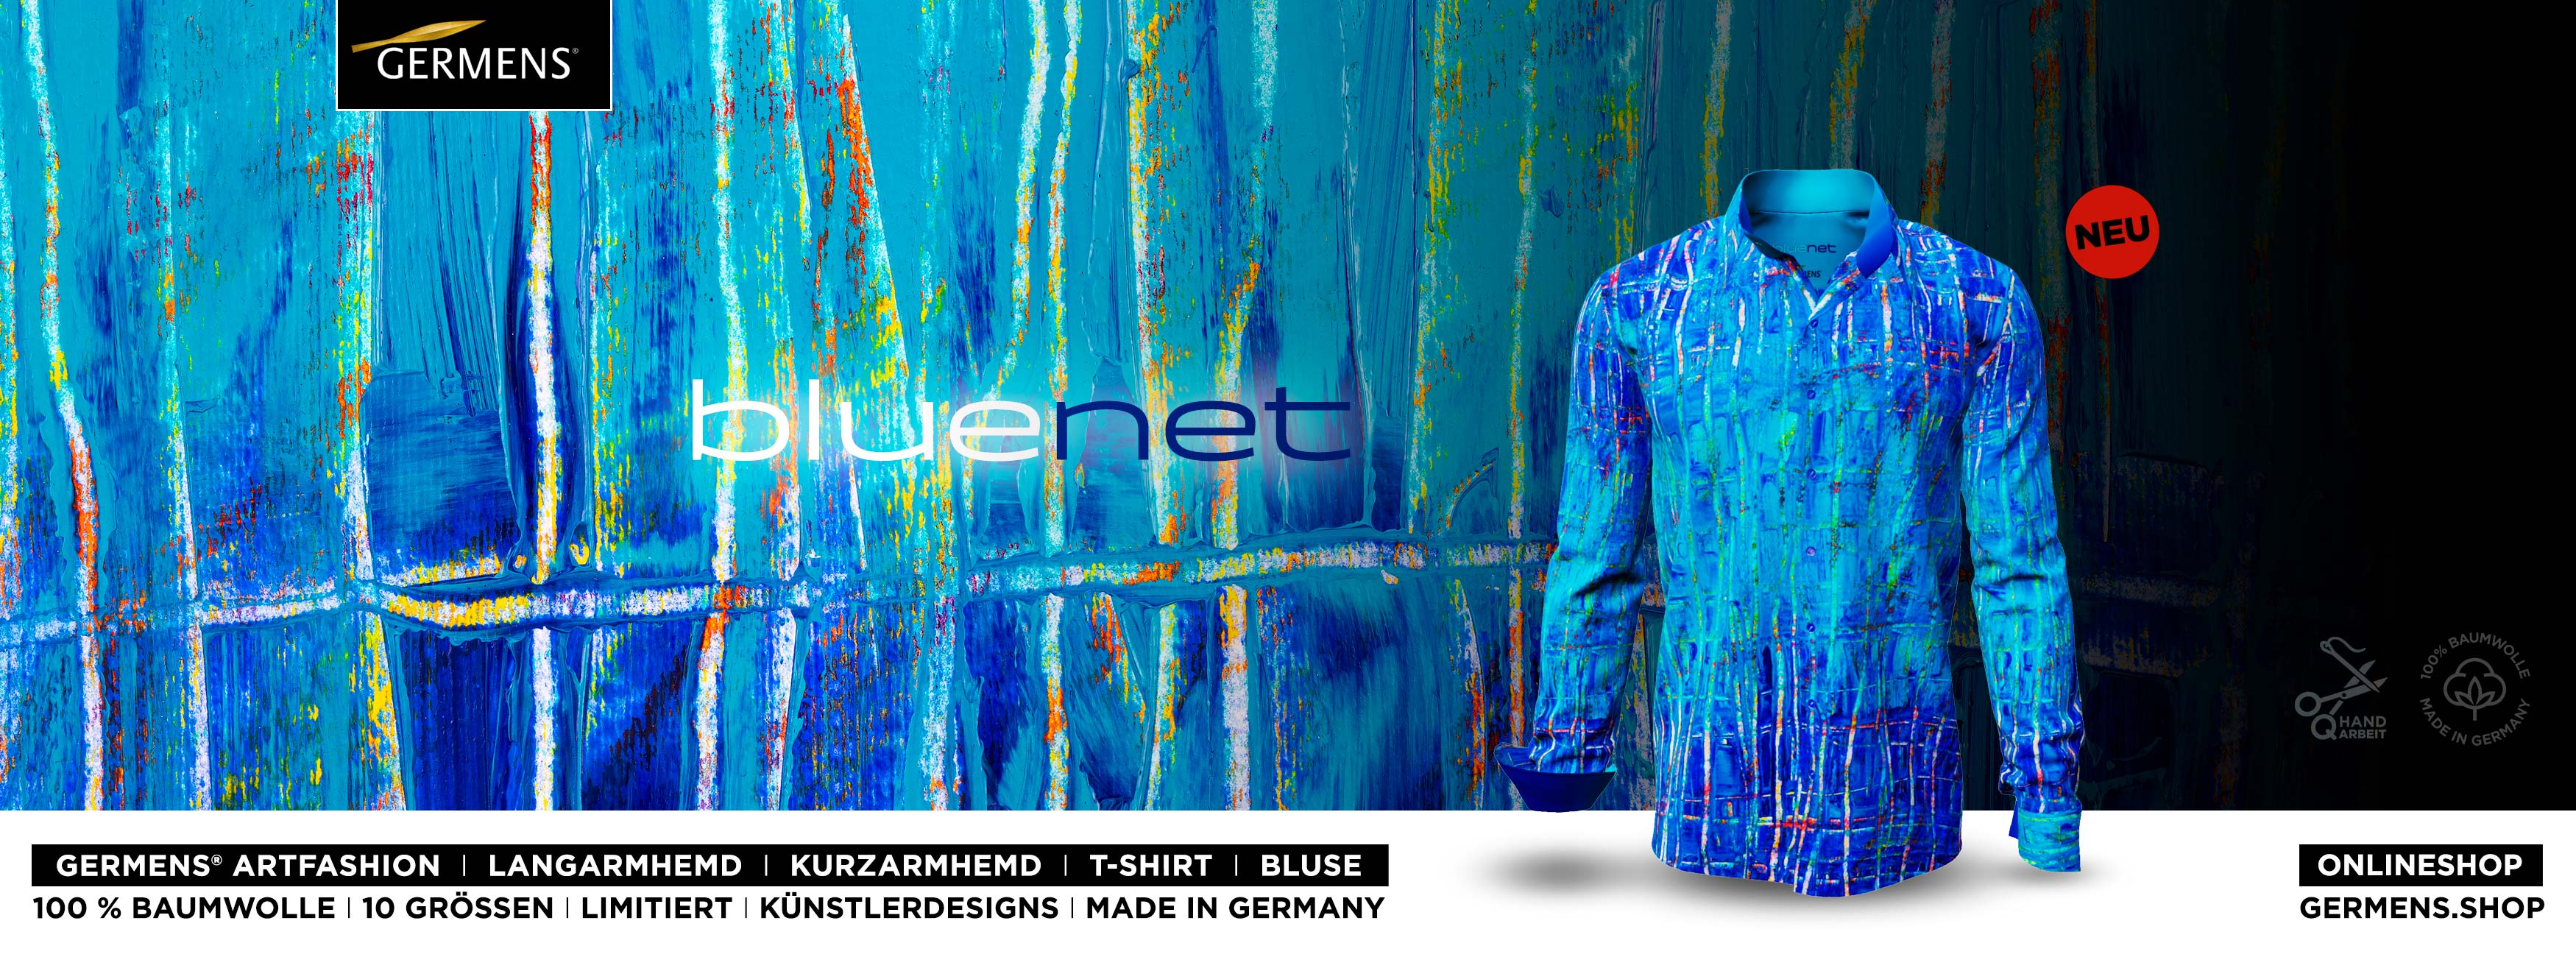 GERMENS® Design BLUENET (273) Shirts - Blouses - T-shirts